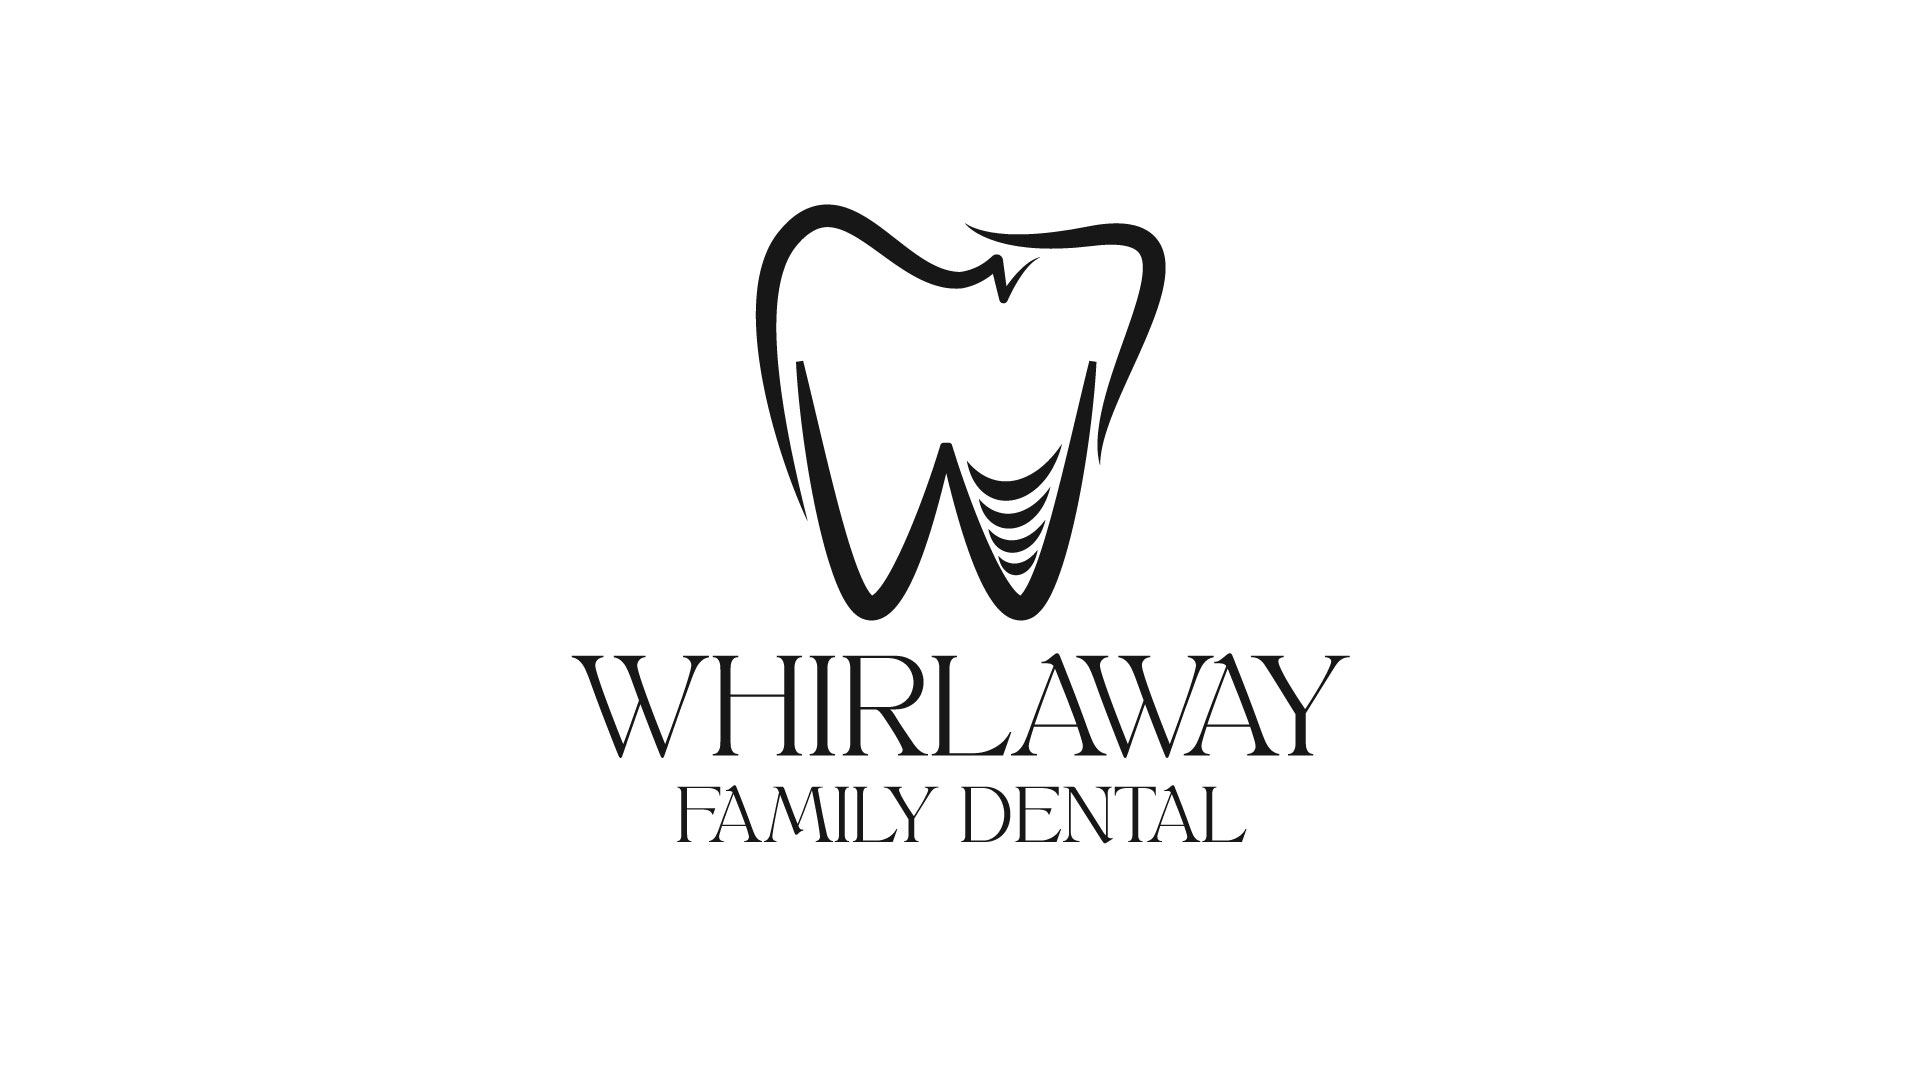 Whirlaway Family Dental